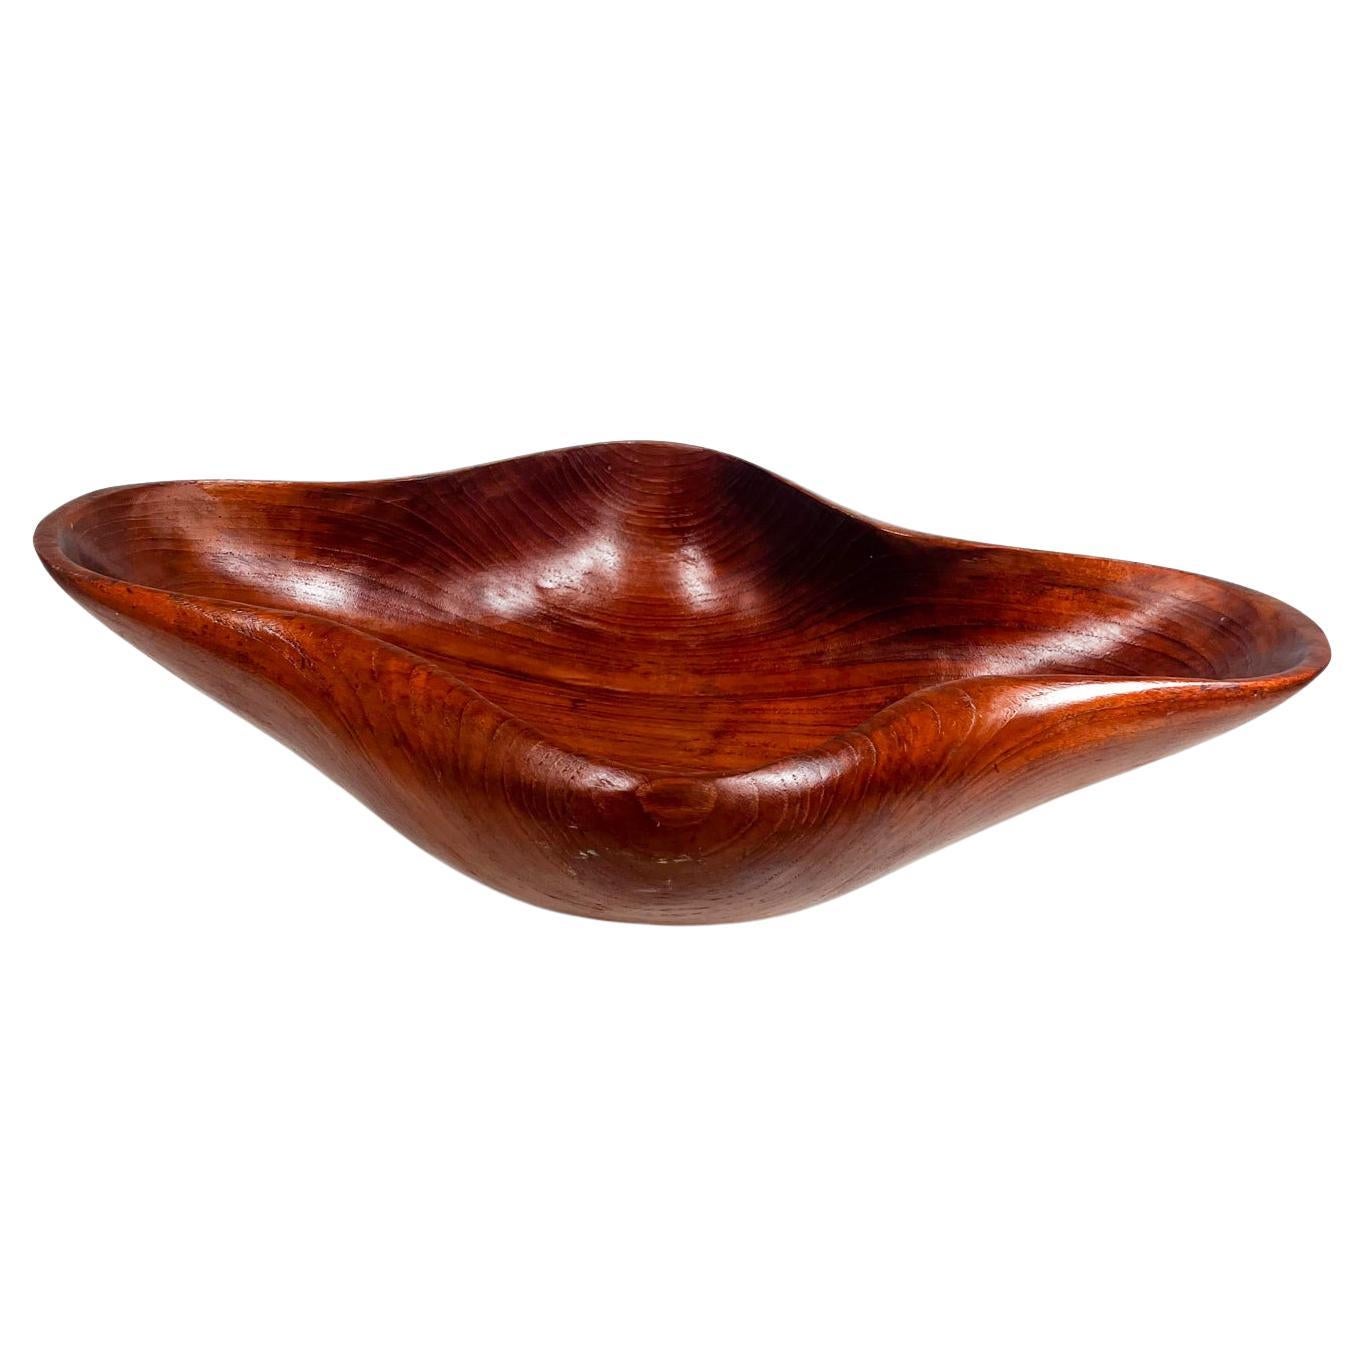 1970s Sculptural Organic Modern Bowl in Teak Wood For Sale